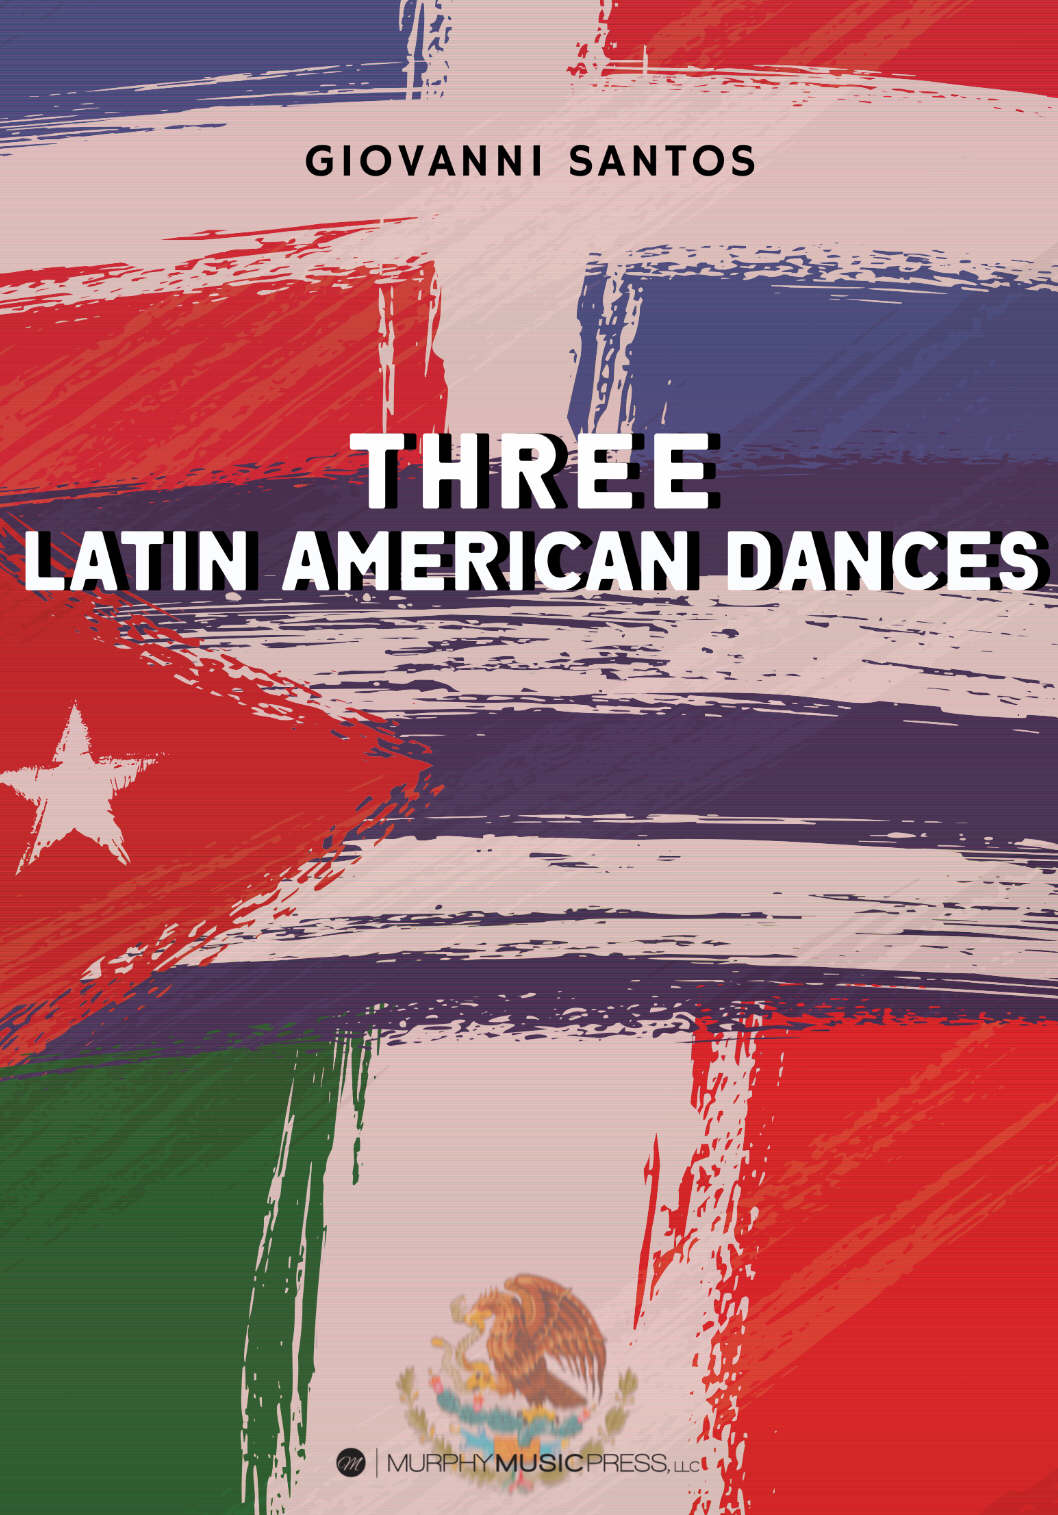 Three Latin American Dances by Giovanni Santos